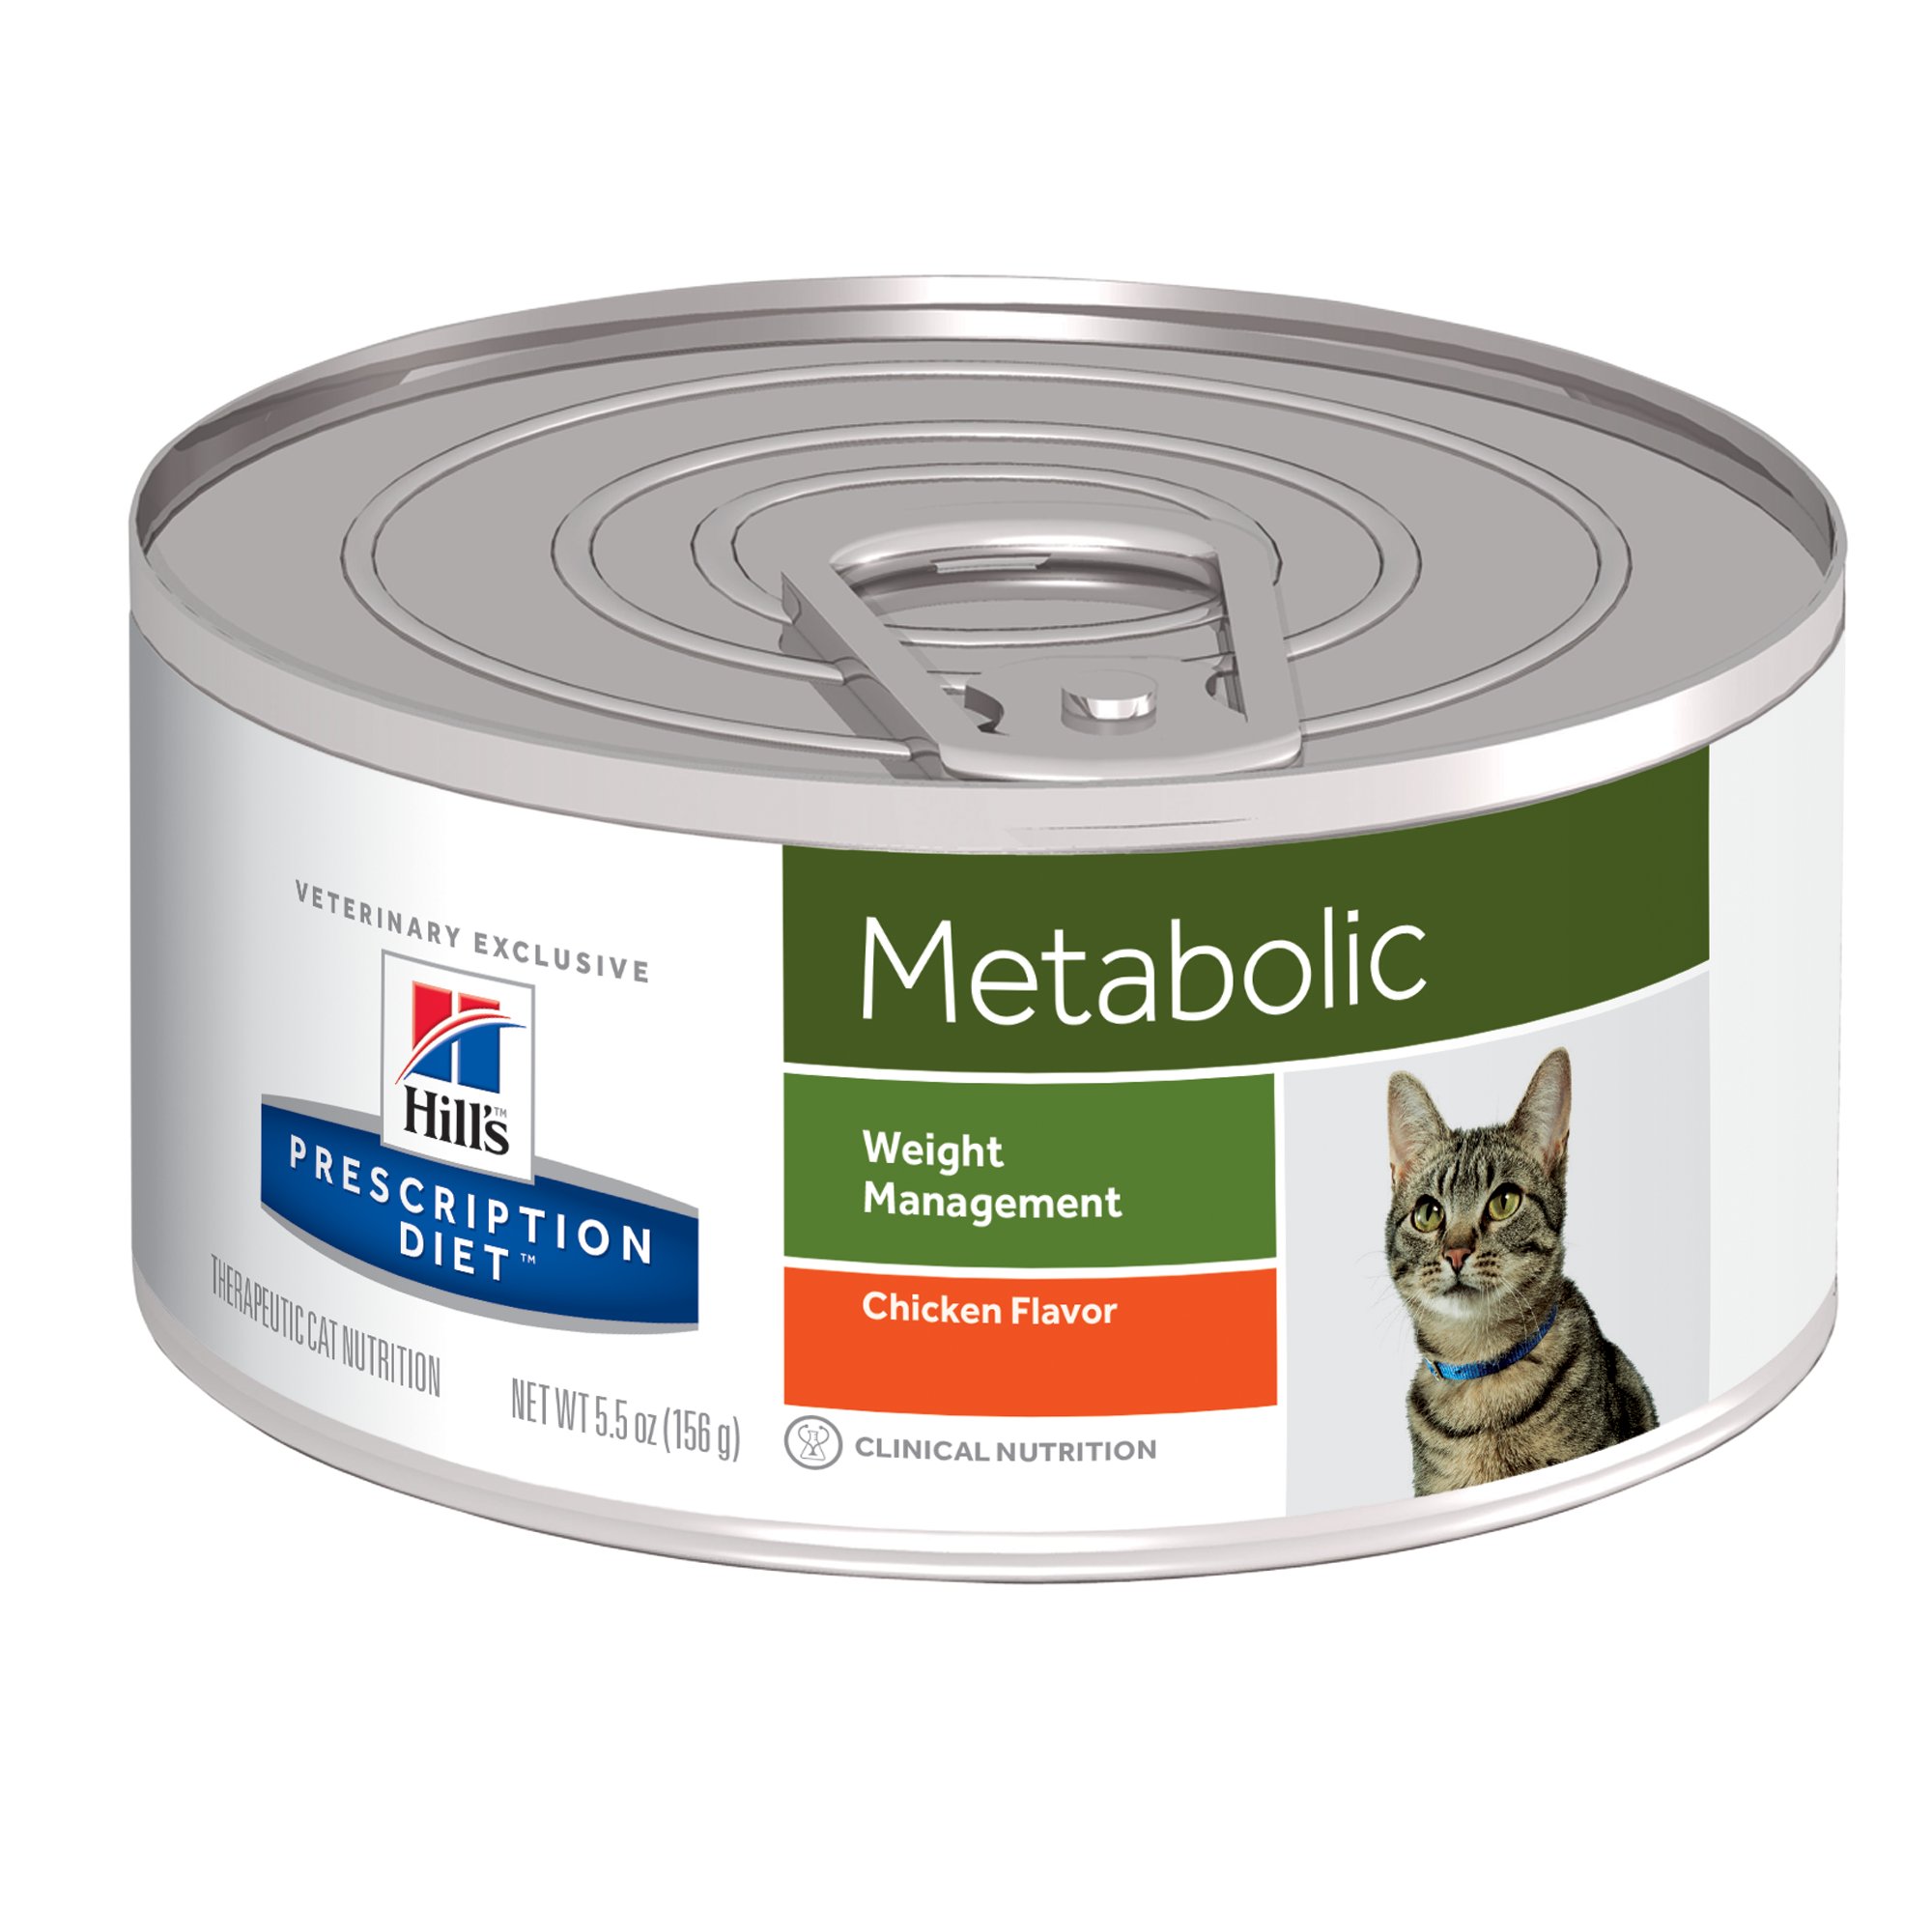 hills metabolic weight management dog food